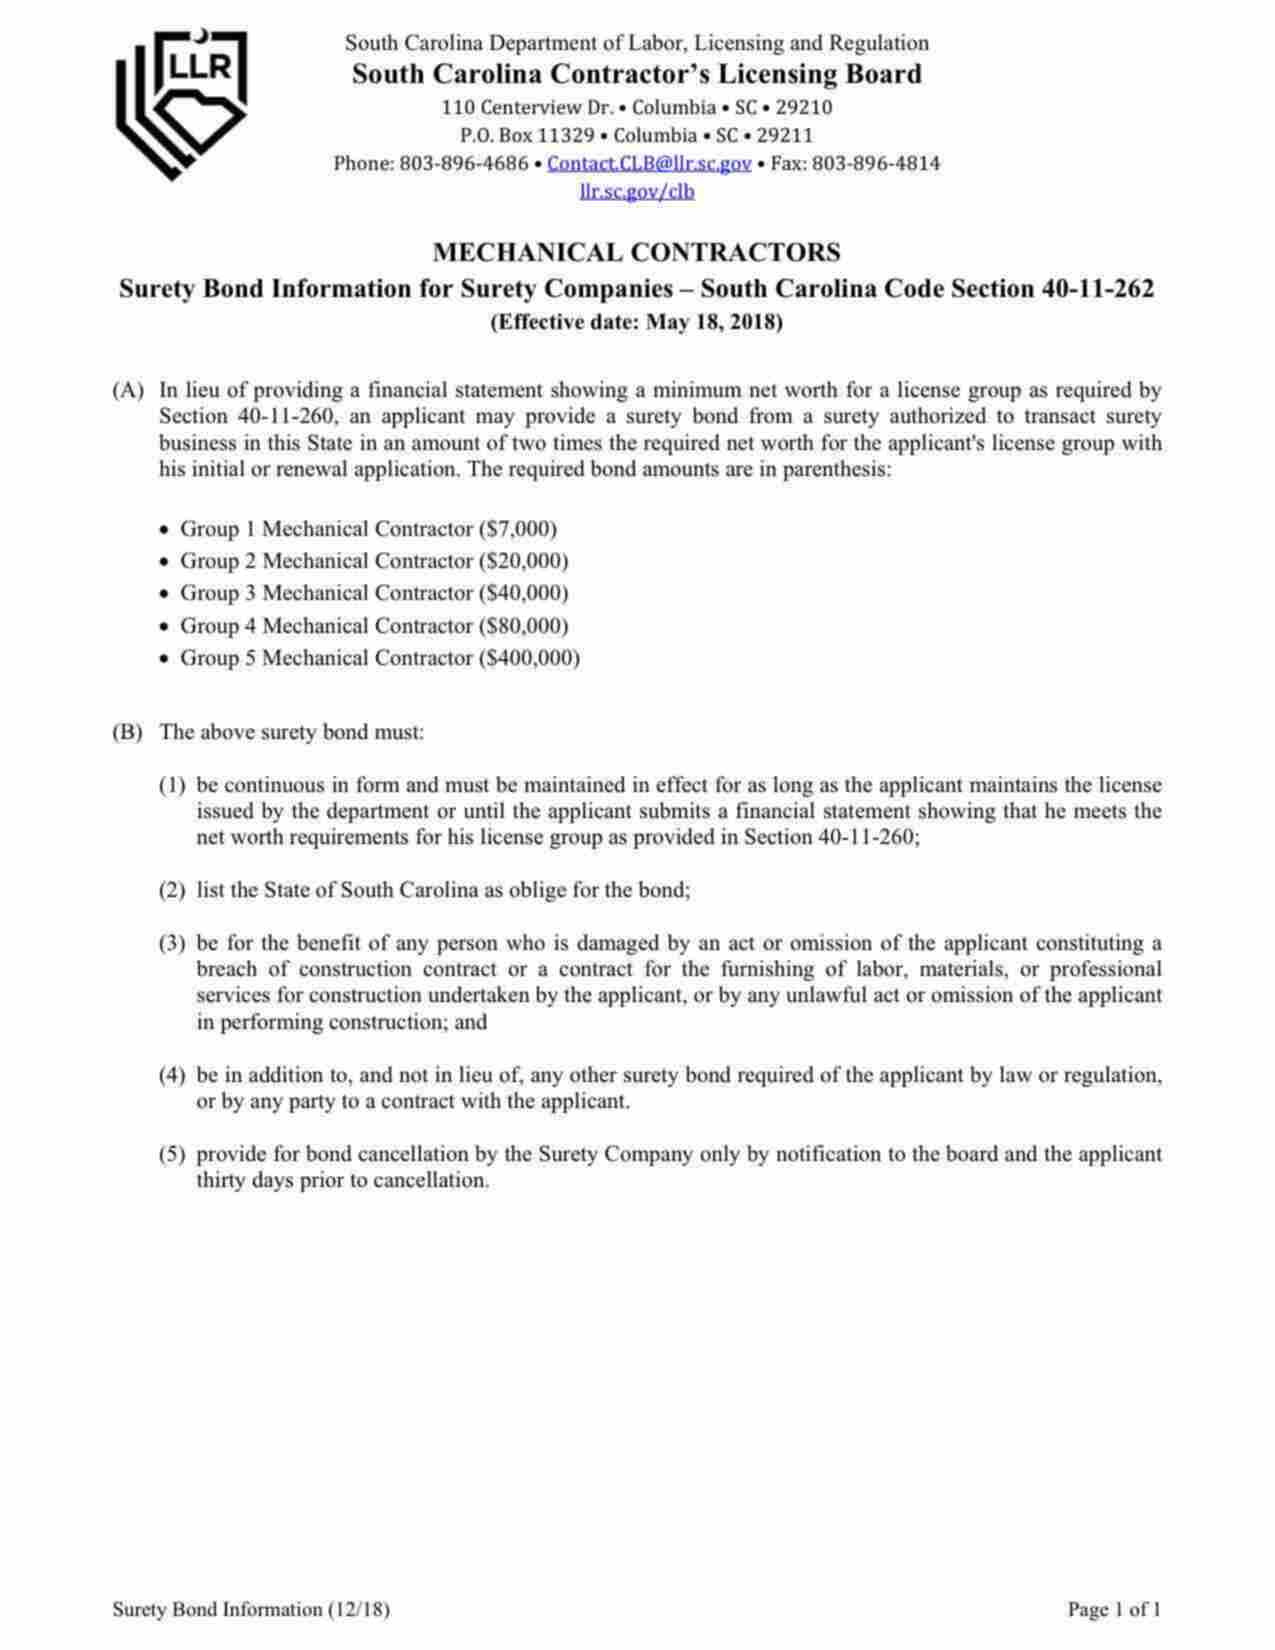 South Carolina Mechanical Contractor (Group 3) Bond Form